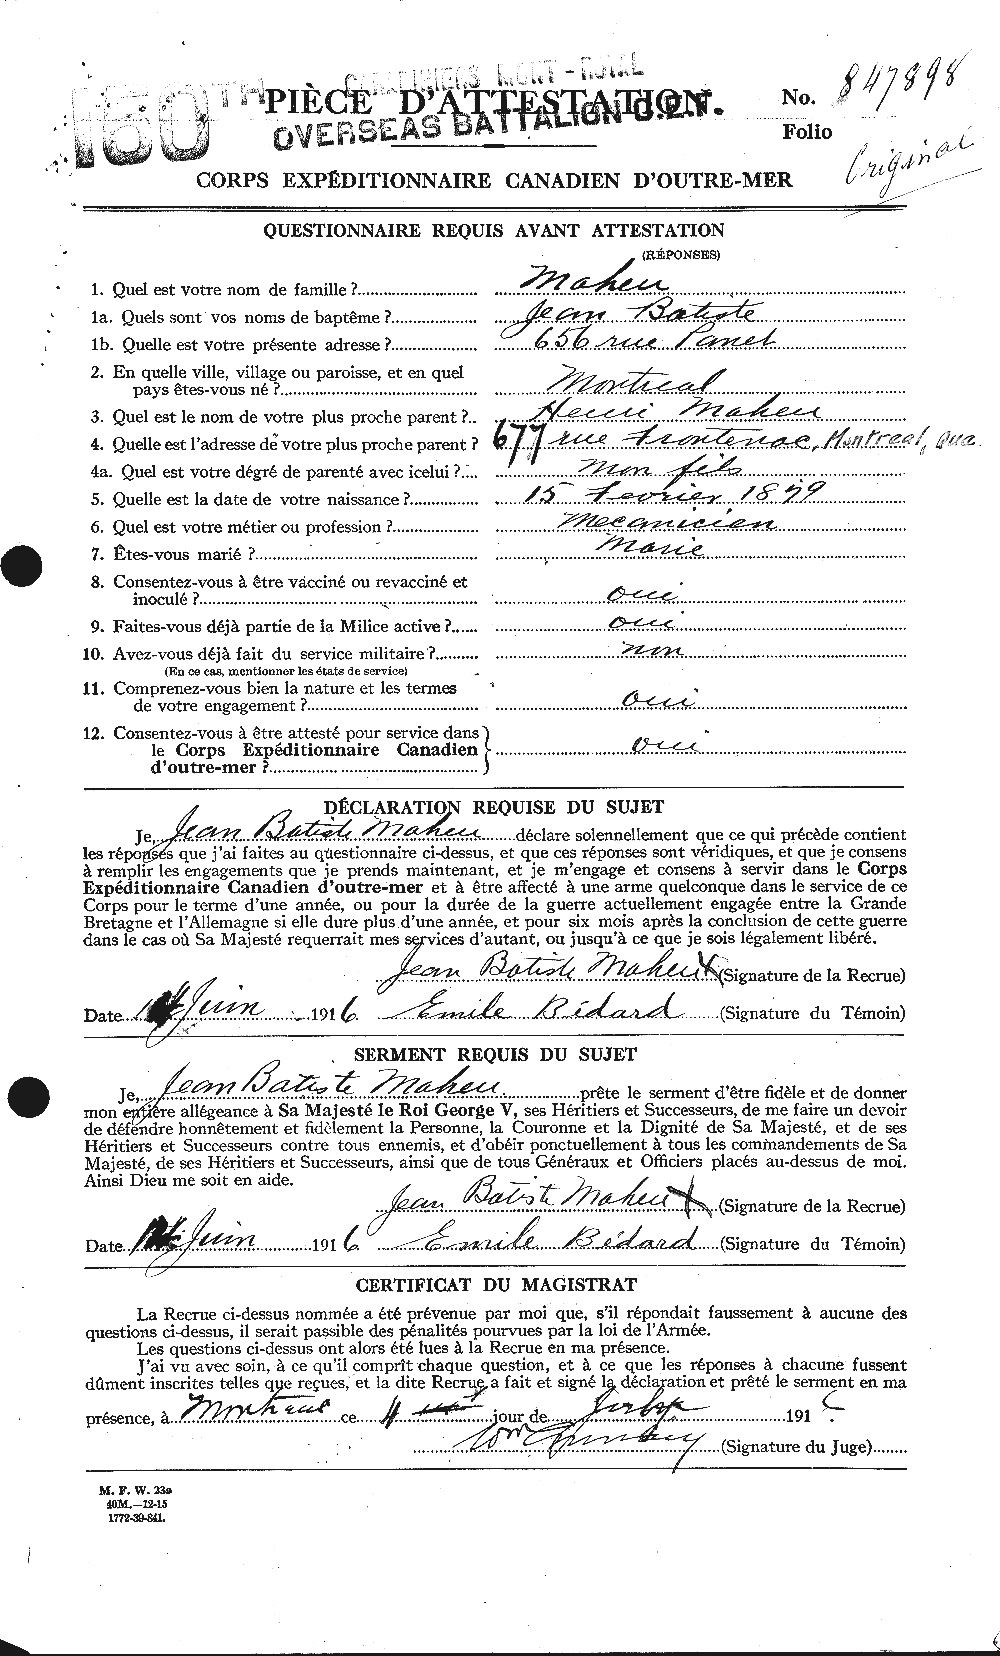 MAHEU, JEAN BAPTISTE 1879-02-15